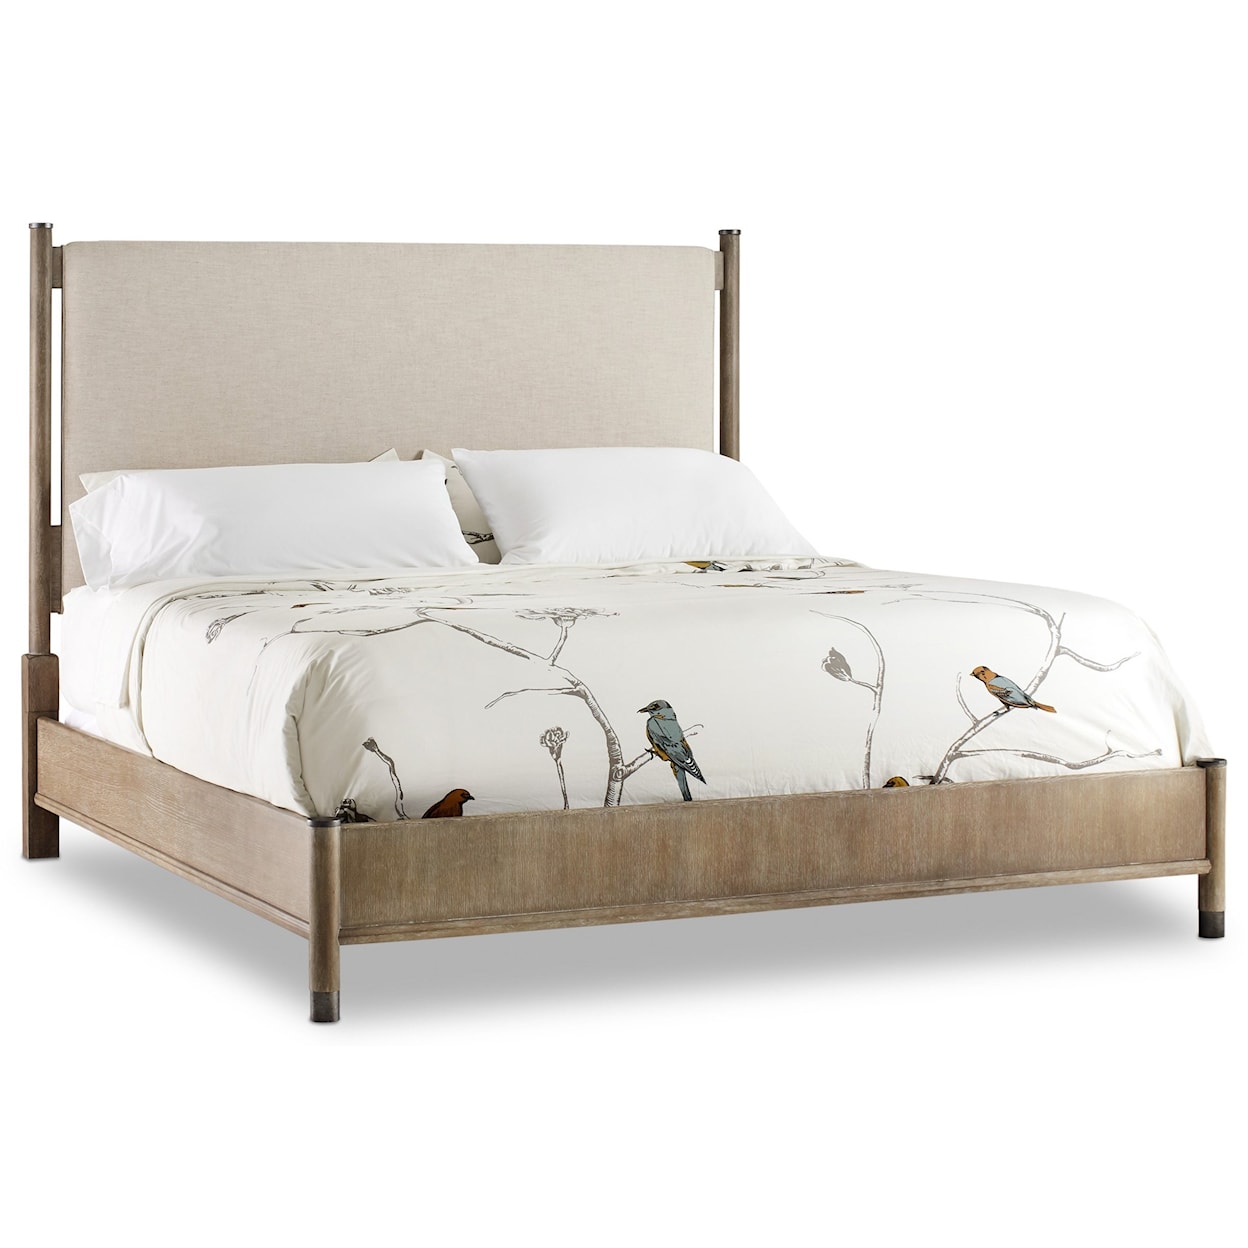 Hooker Furniture Affinity Queen Upholstered Bed